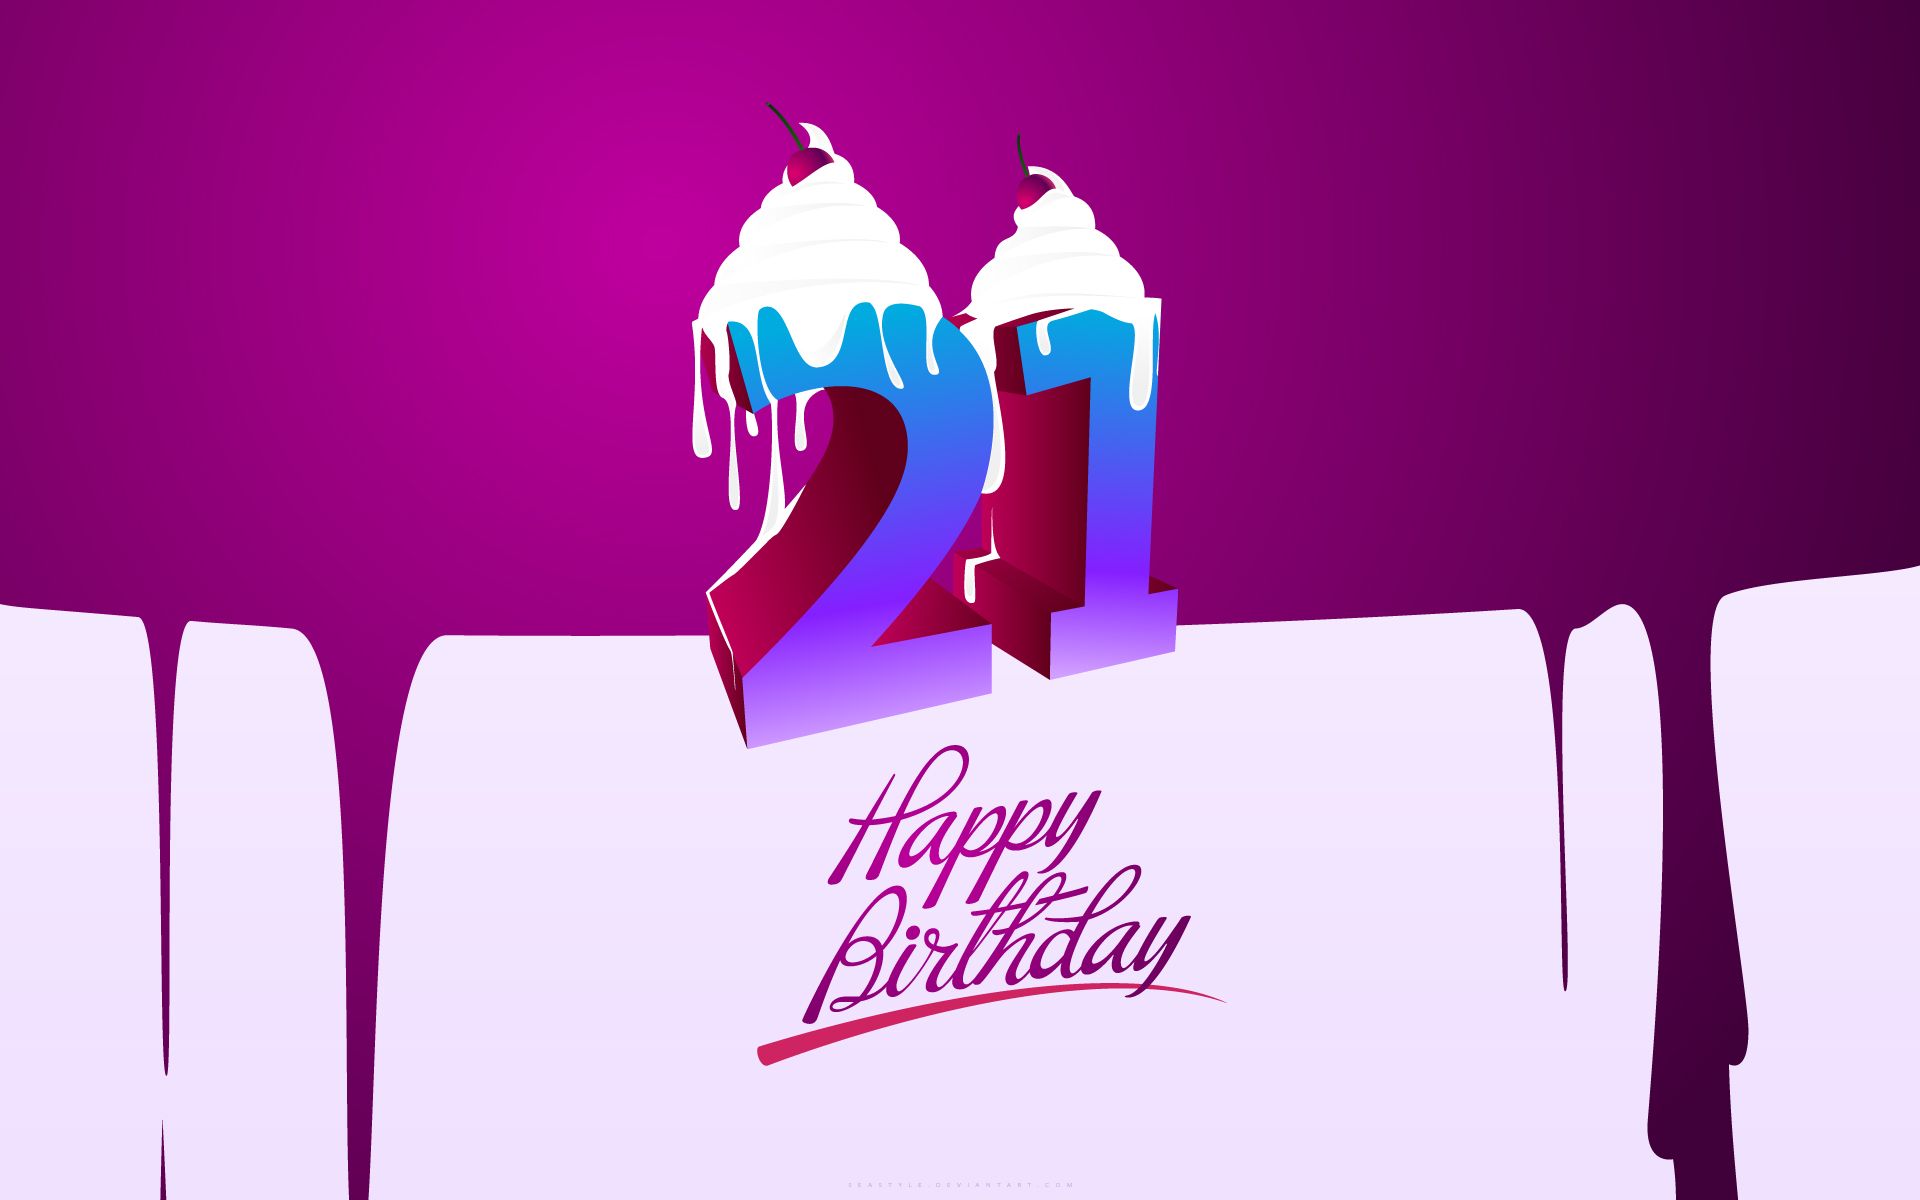 Birthday wallpaper screensaver. Happy birthday quotes, Happy 21st birthday wishes, 21st birthday wishes